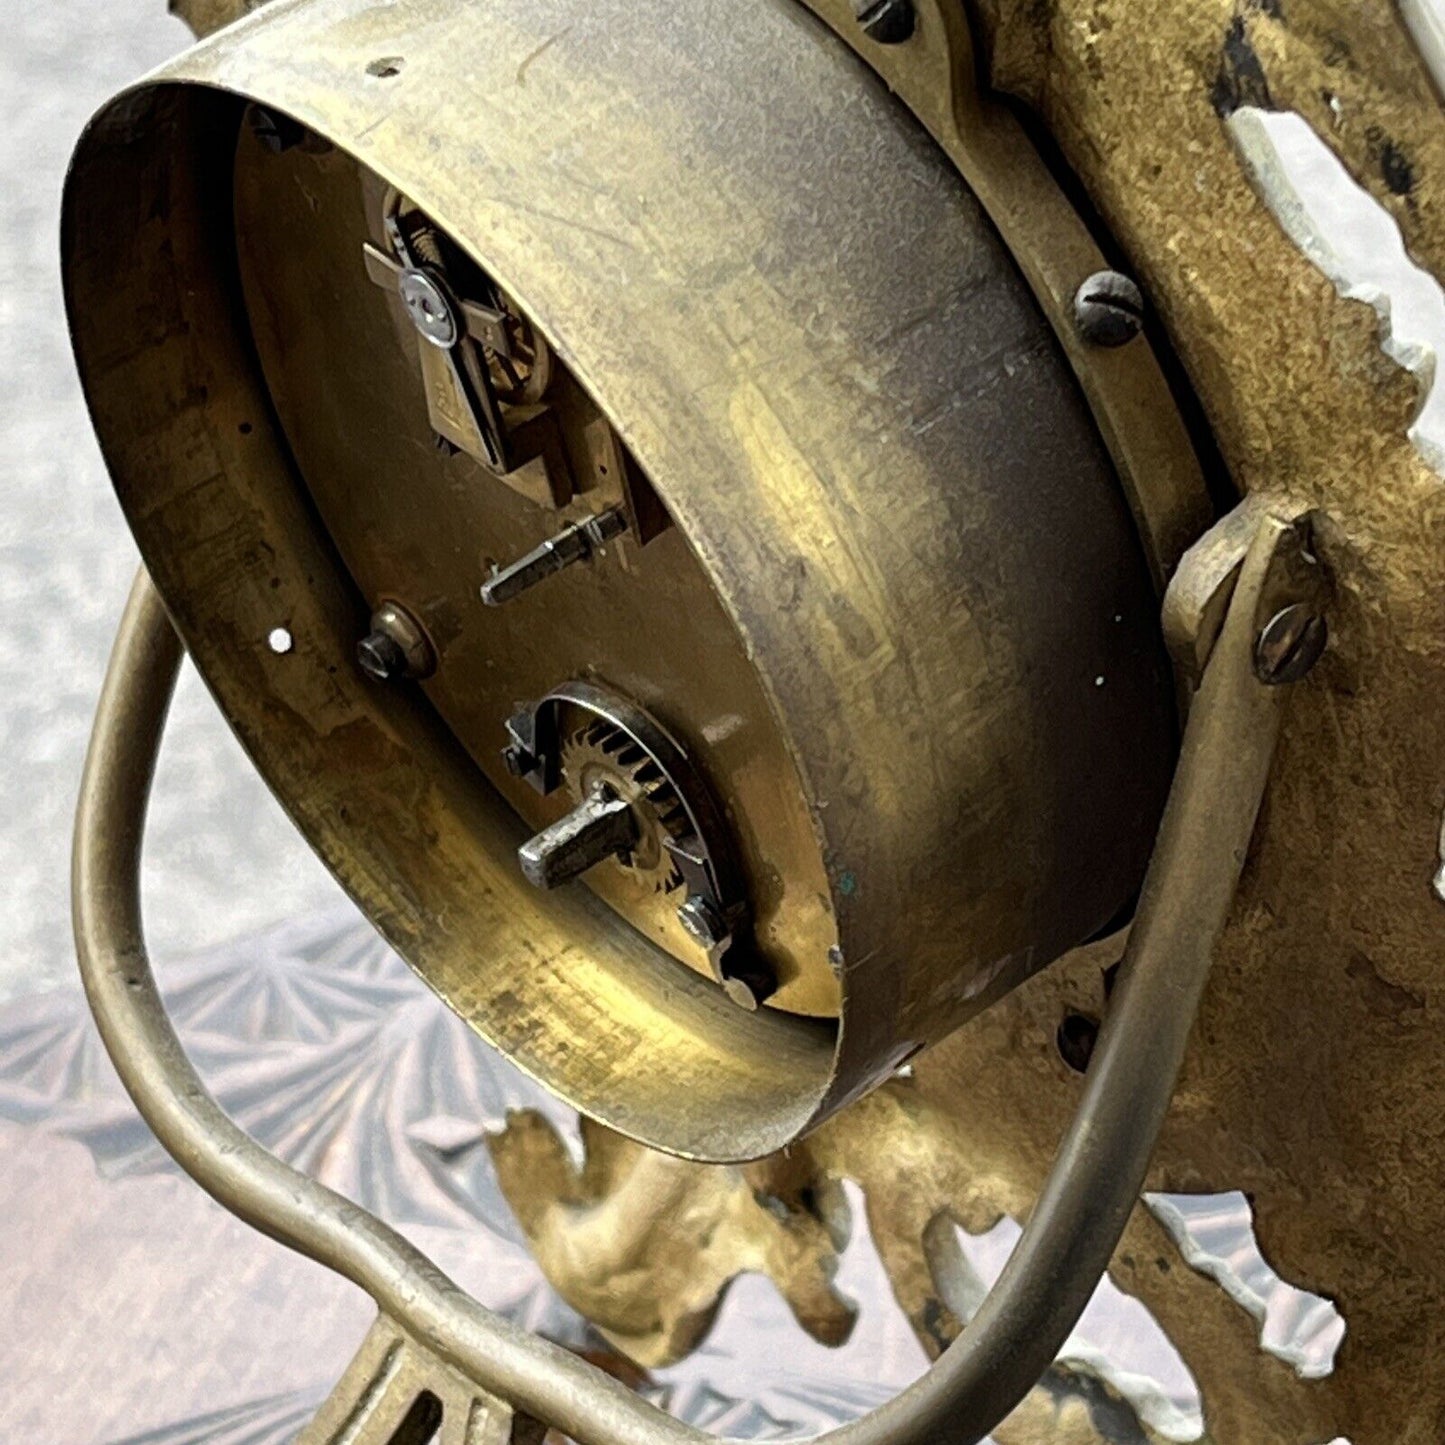 Victorian French Brass Clock